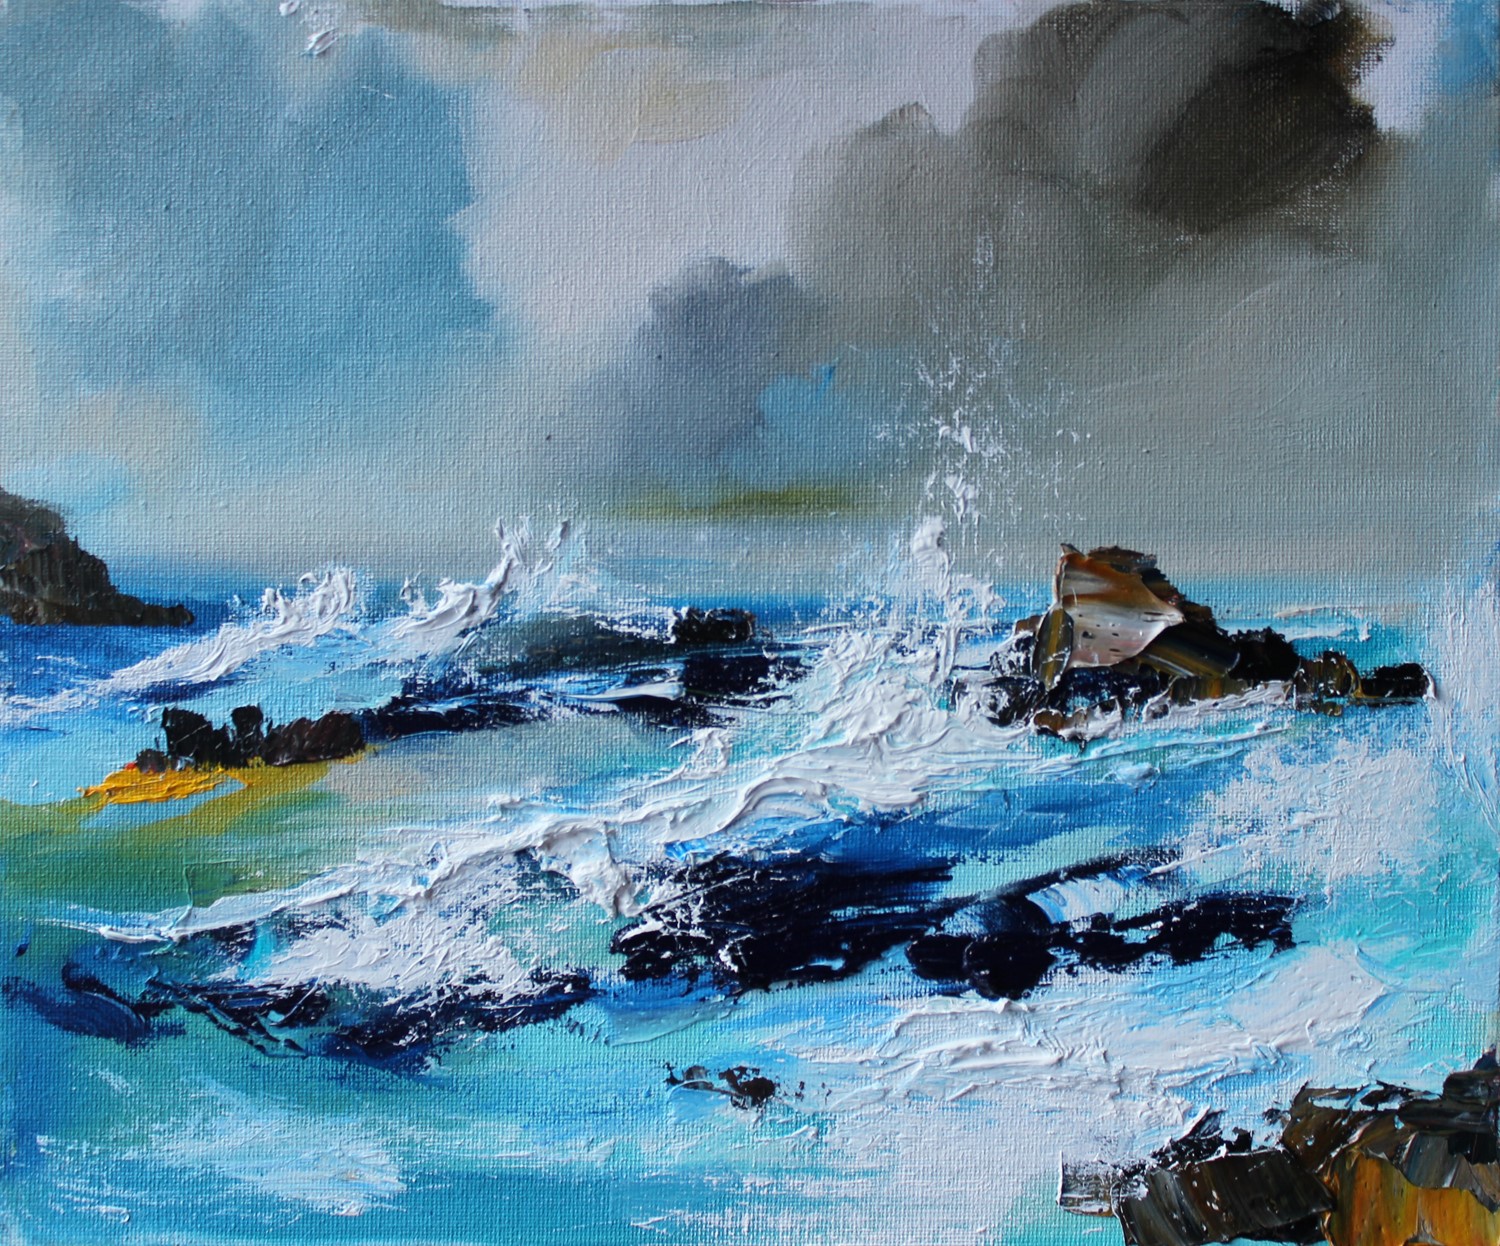 'Waves Crashing across the Rocks ' by artist Rosanne Barr